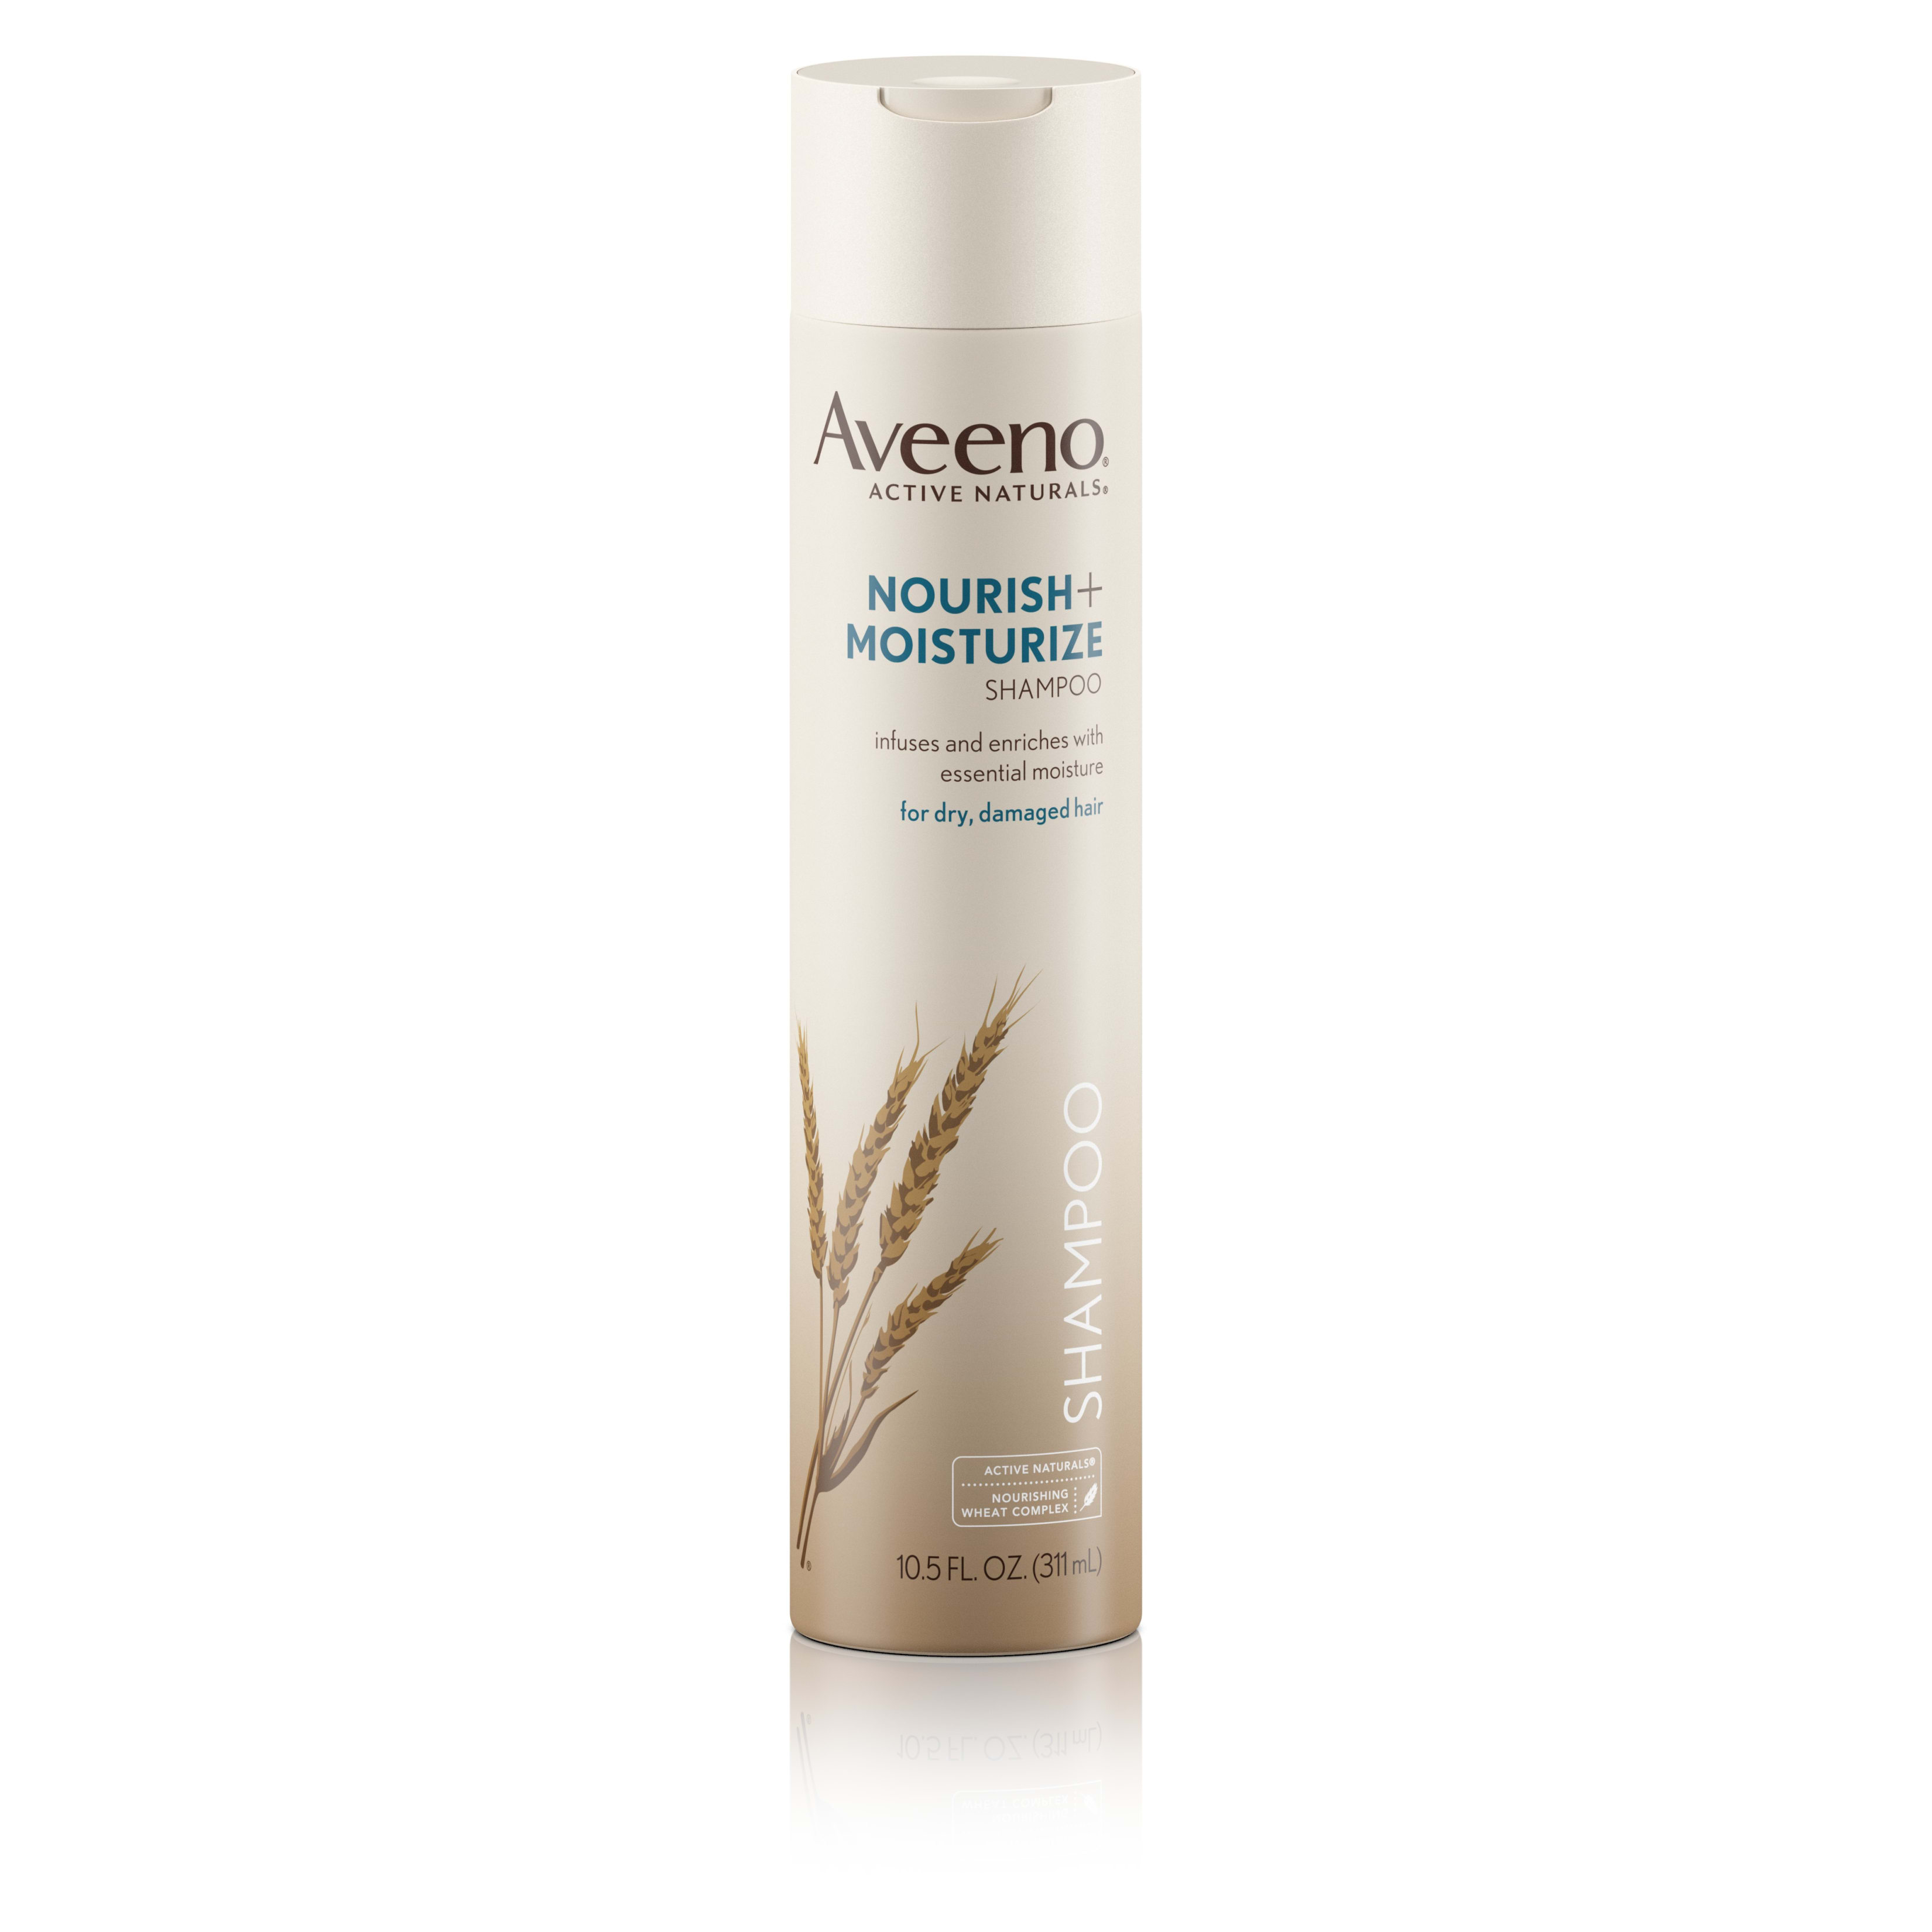 Aveeno Nourish+ Moisturize Gentle Hydrating Shampoo, 10.5 fl. oz - image 1 of 9